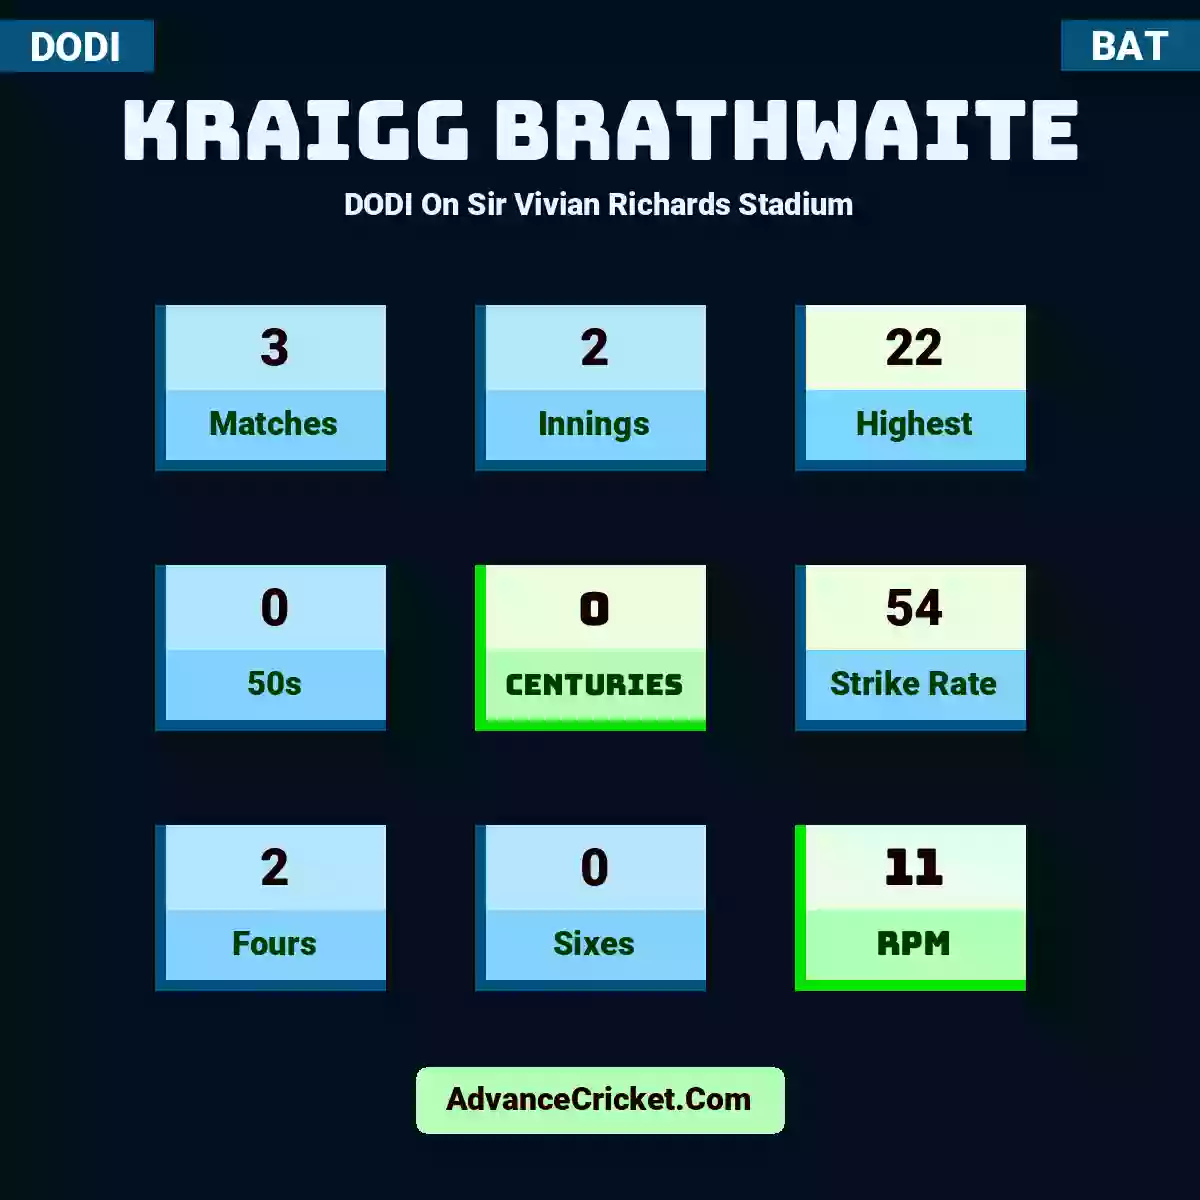 Kraigg Brathwaite DODI  On Sir Vivian Richards Stadium, Kraigg Brathwaite played 3 matches, scored 22 runs as highest, 0 half-centuries, and 0 centuries, with a strike rate of 54. K.Brathwaite hit 2 fours and 0 sixes, with an RPM of 11.